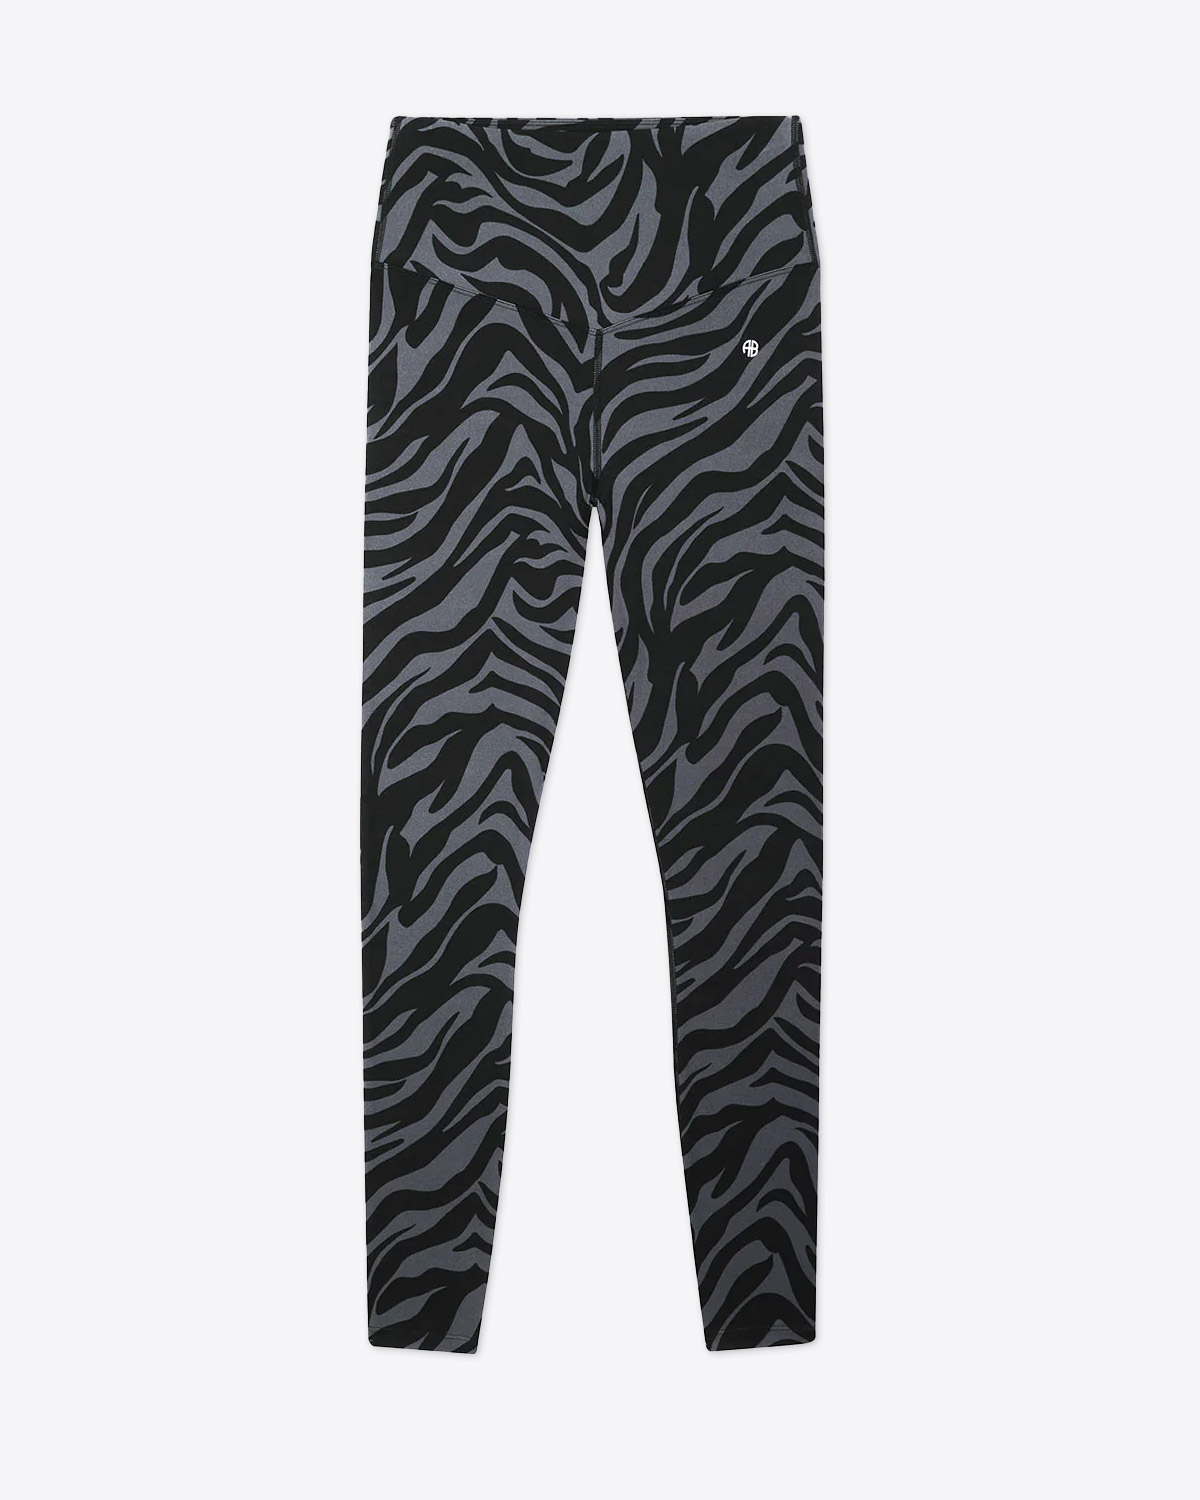 https://www.lagrandeboutique.net/media/catalog/product/a/b/ab-blake-legging---zebra-prints-03-9116-002_985x.jpg